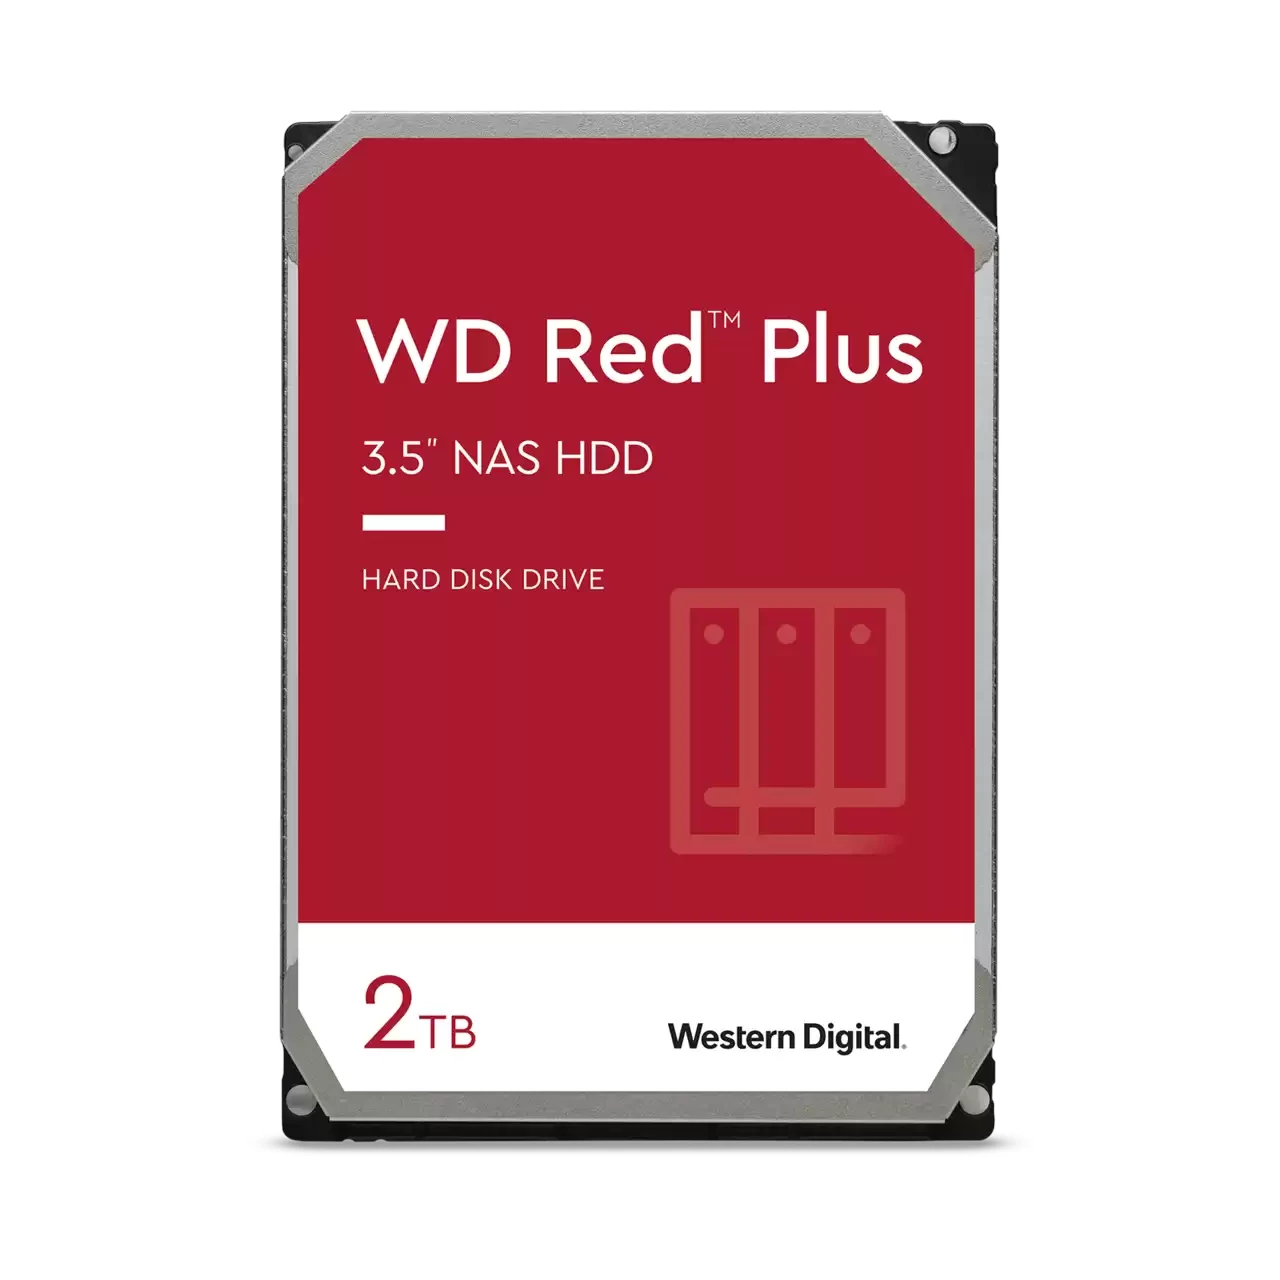 WD Red Plus 2Tb 3.5" NAS Hard Drive (128Mb 5400rpm SATA3) #WD20EFZX